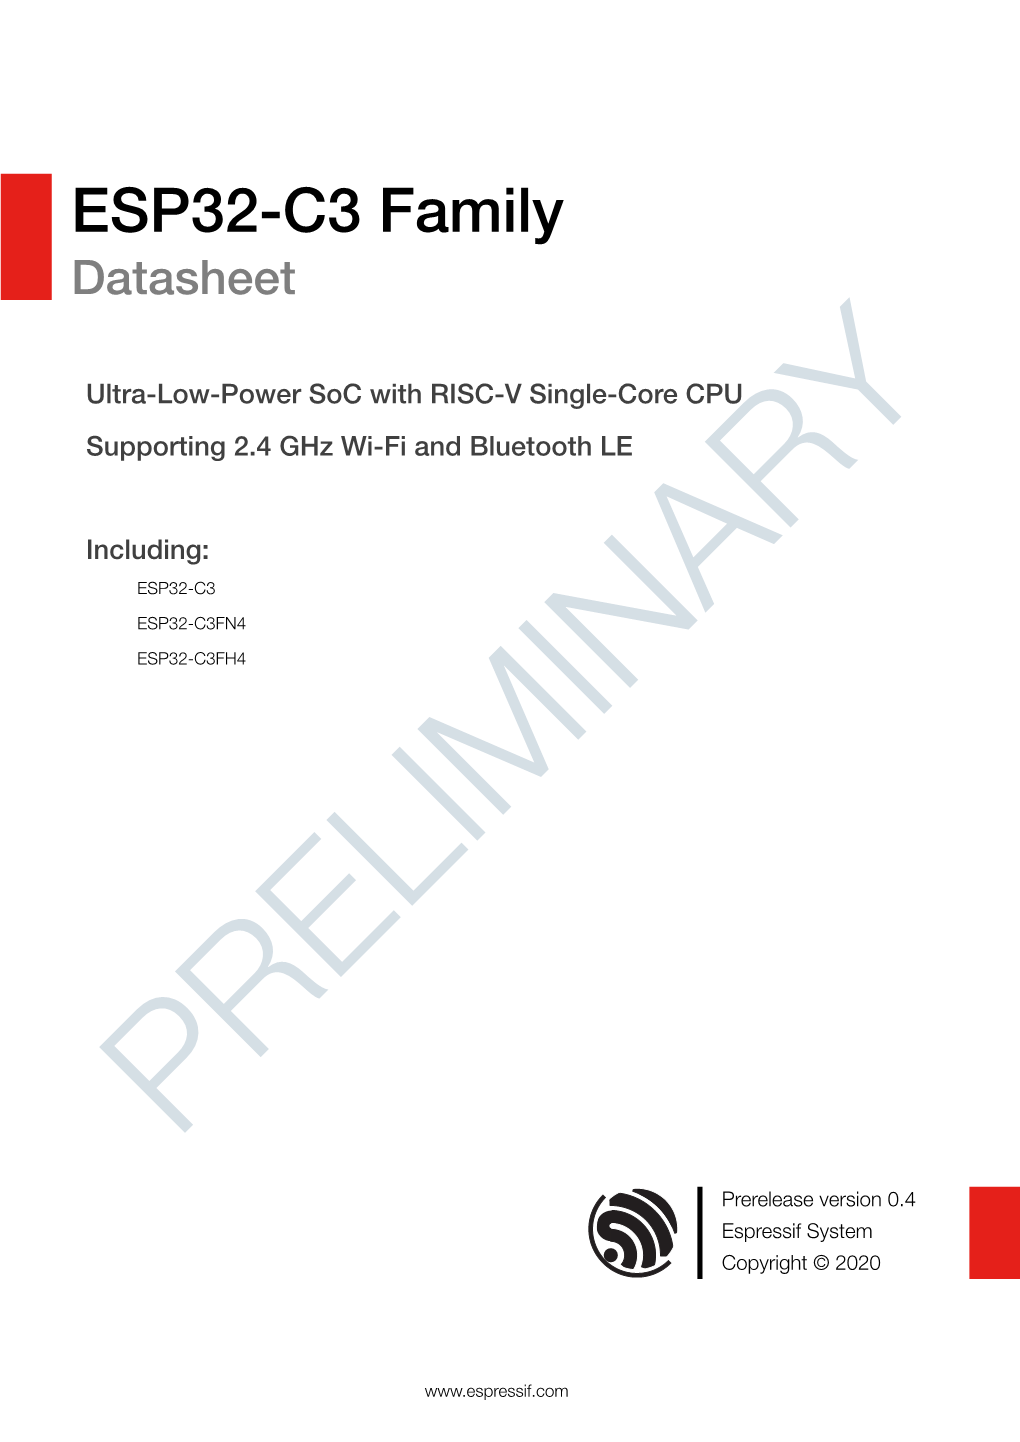 ESP32-C3 Family Datasheet